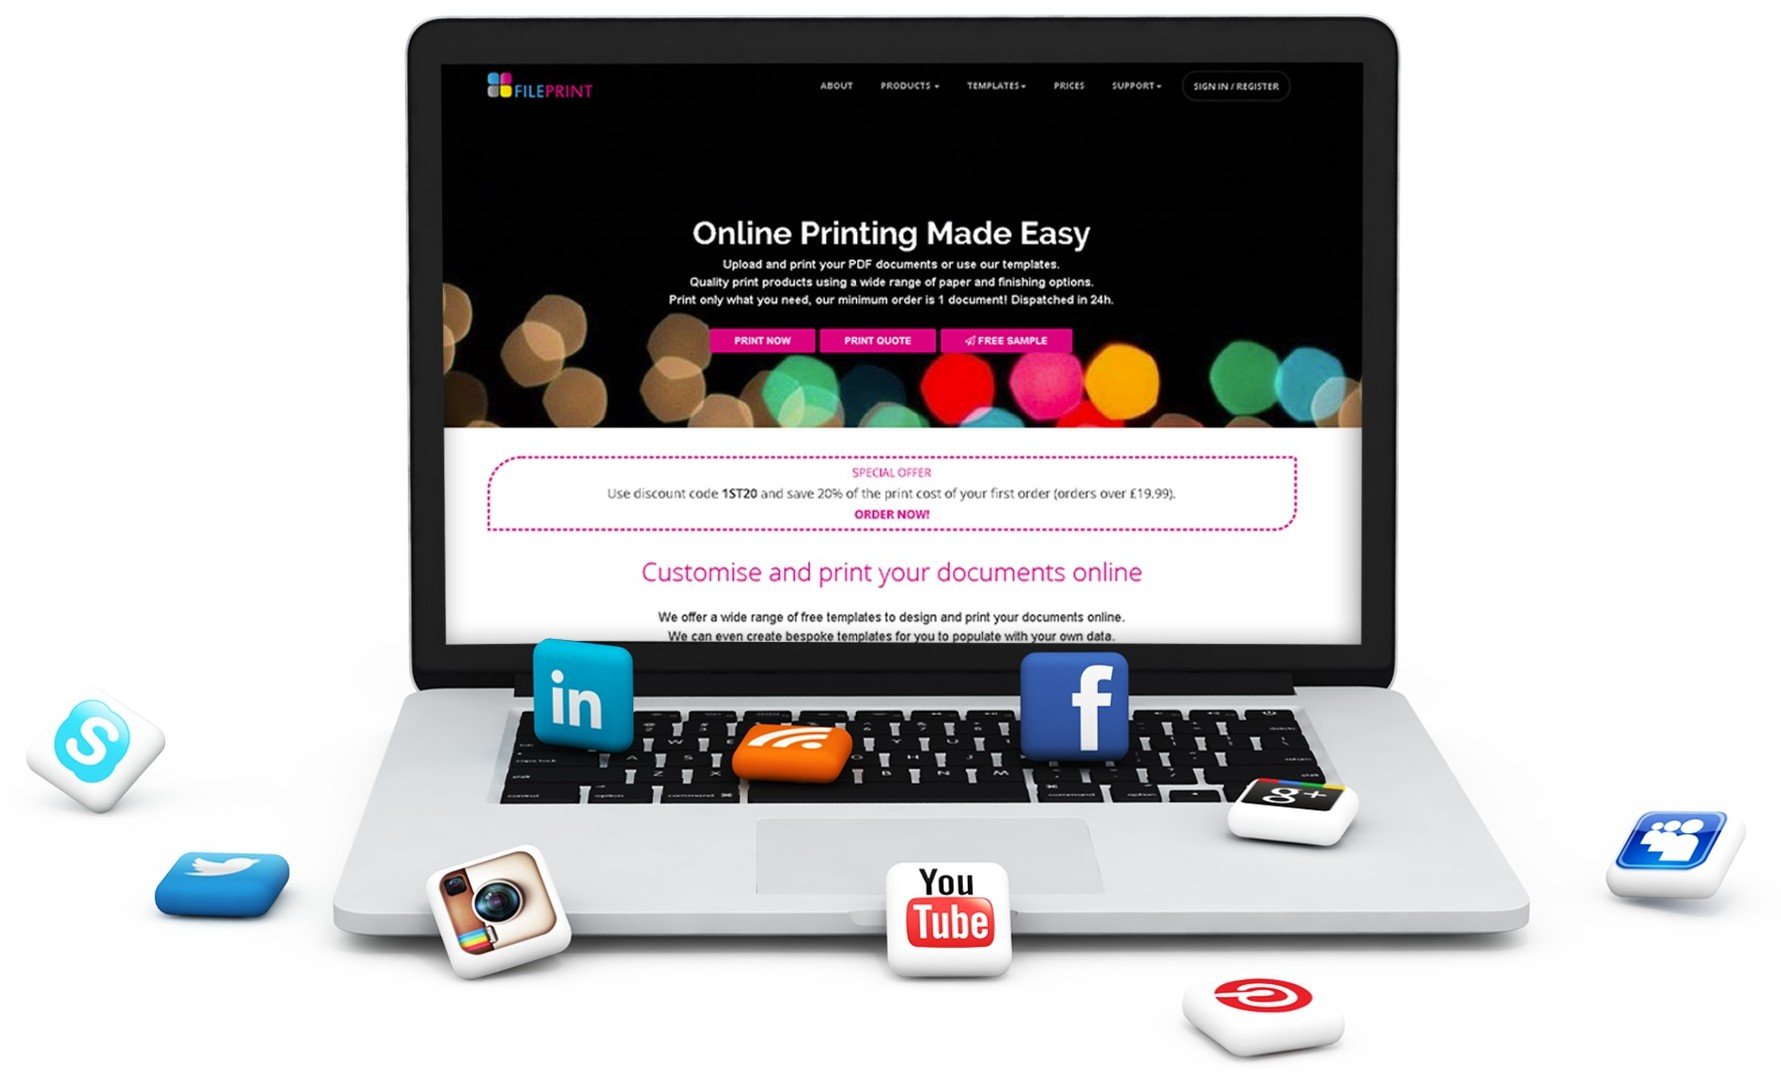 Web-to-print digital marketing